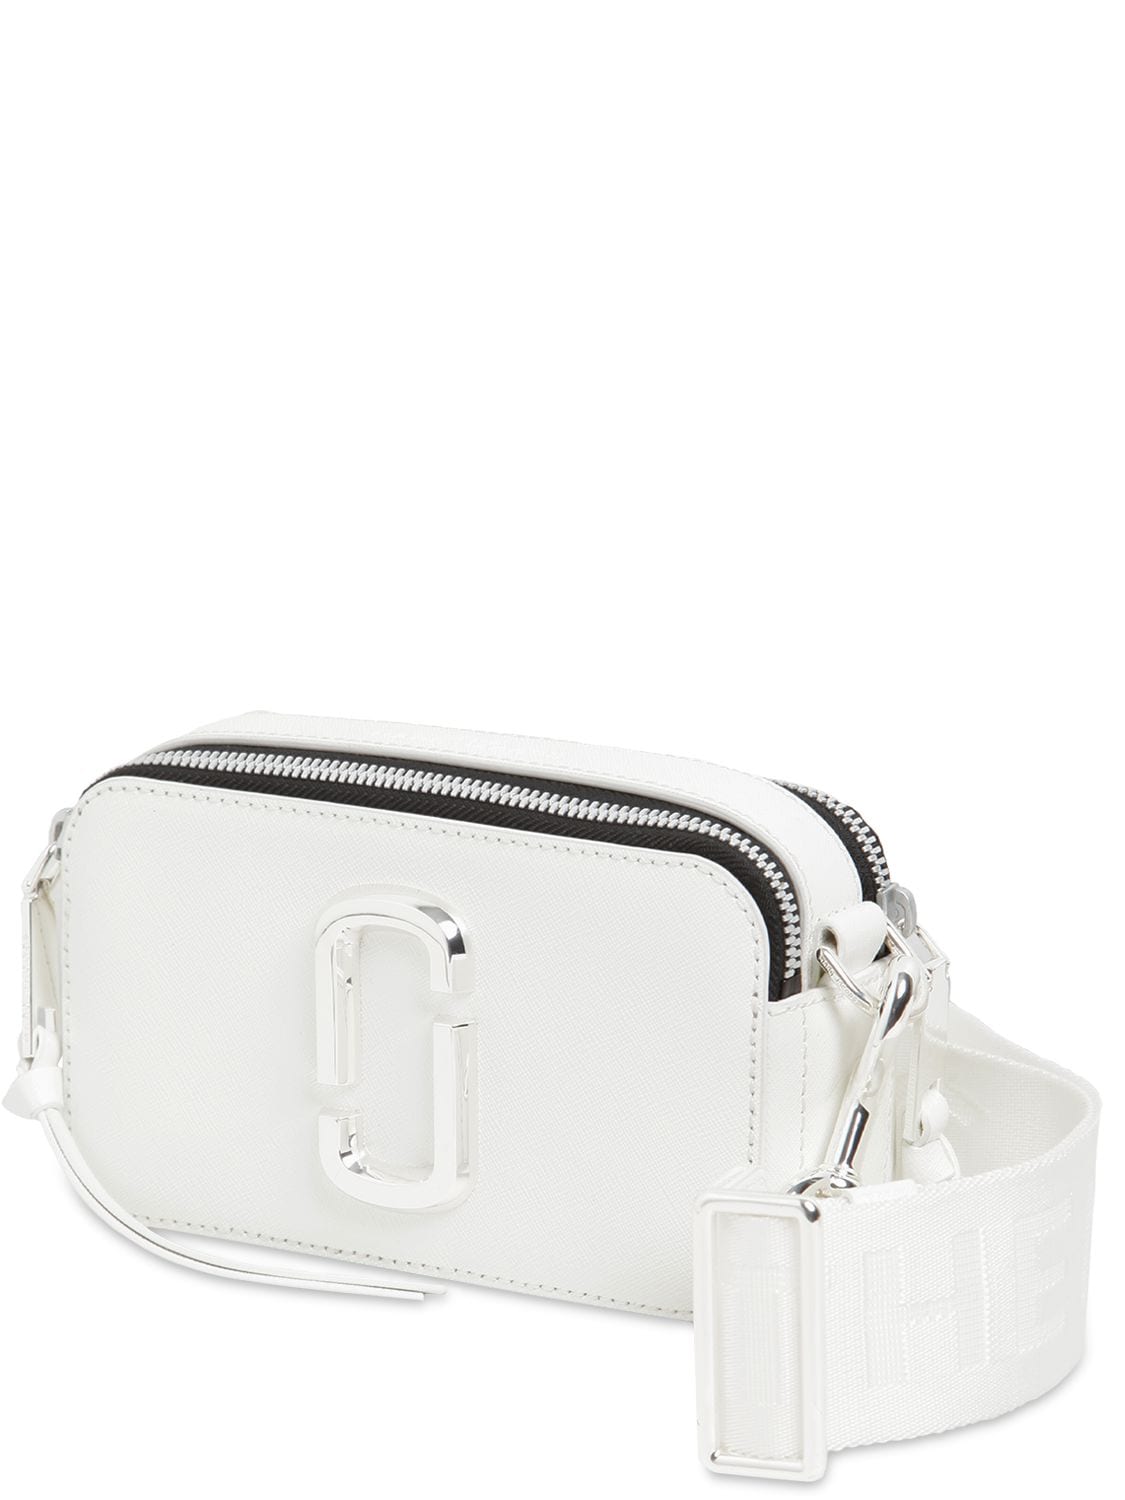 Marc Jacobs The Snapshot Dtm Leather Shoulder Bag In White